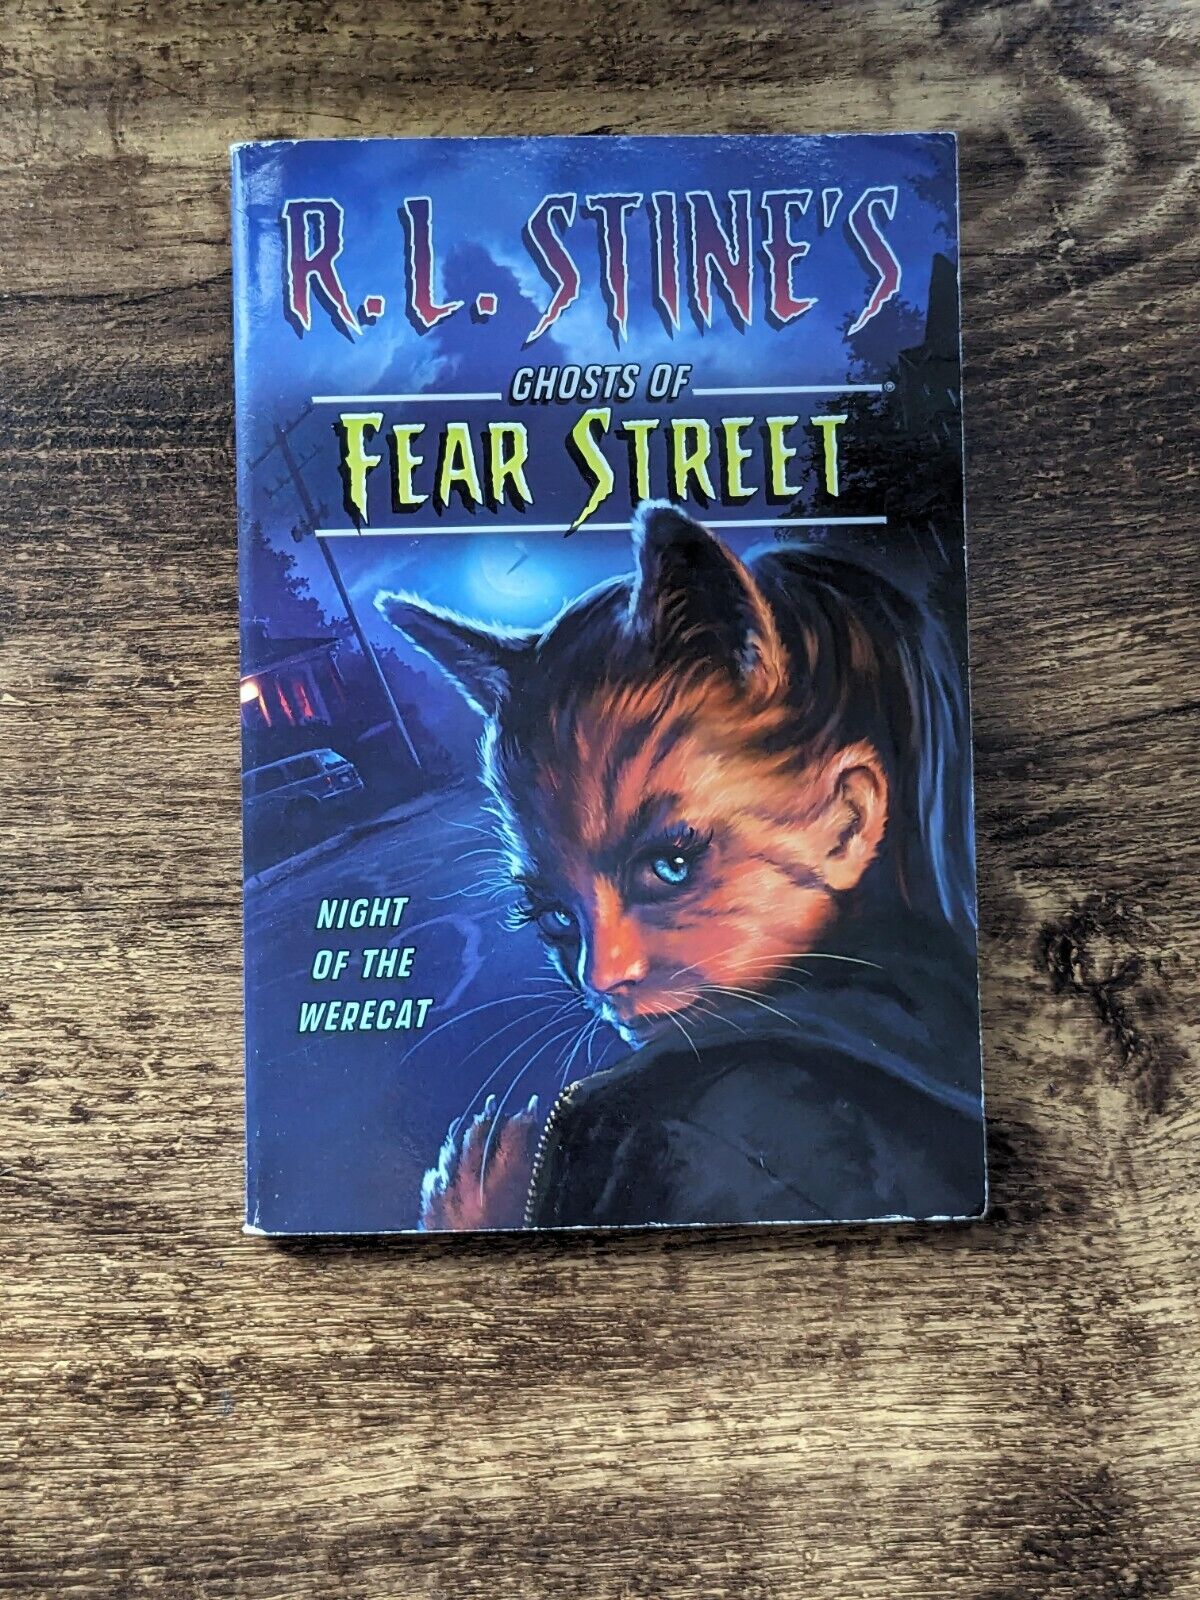 Night of the Werecat by R L Stine (Ghosts of Fear Street) - Asylum Books